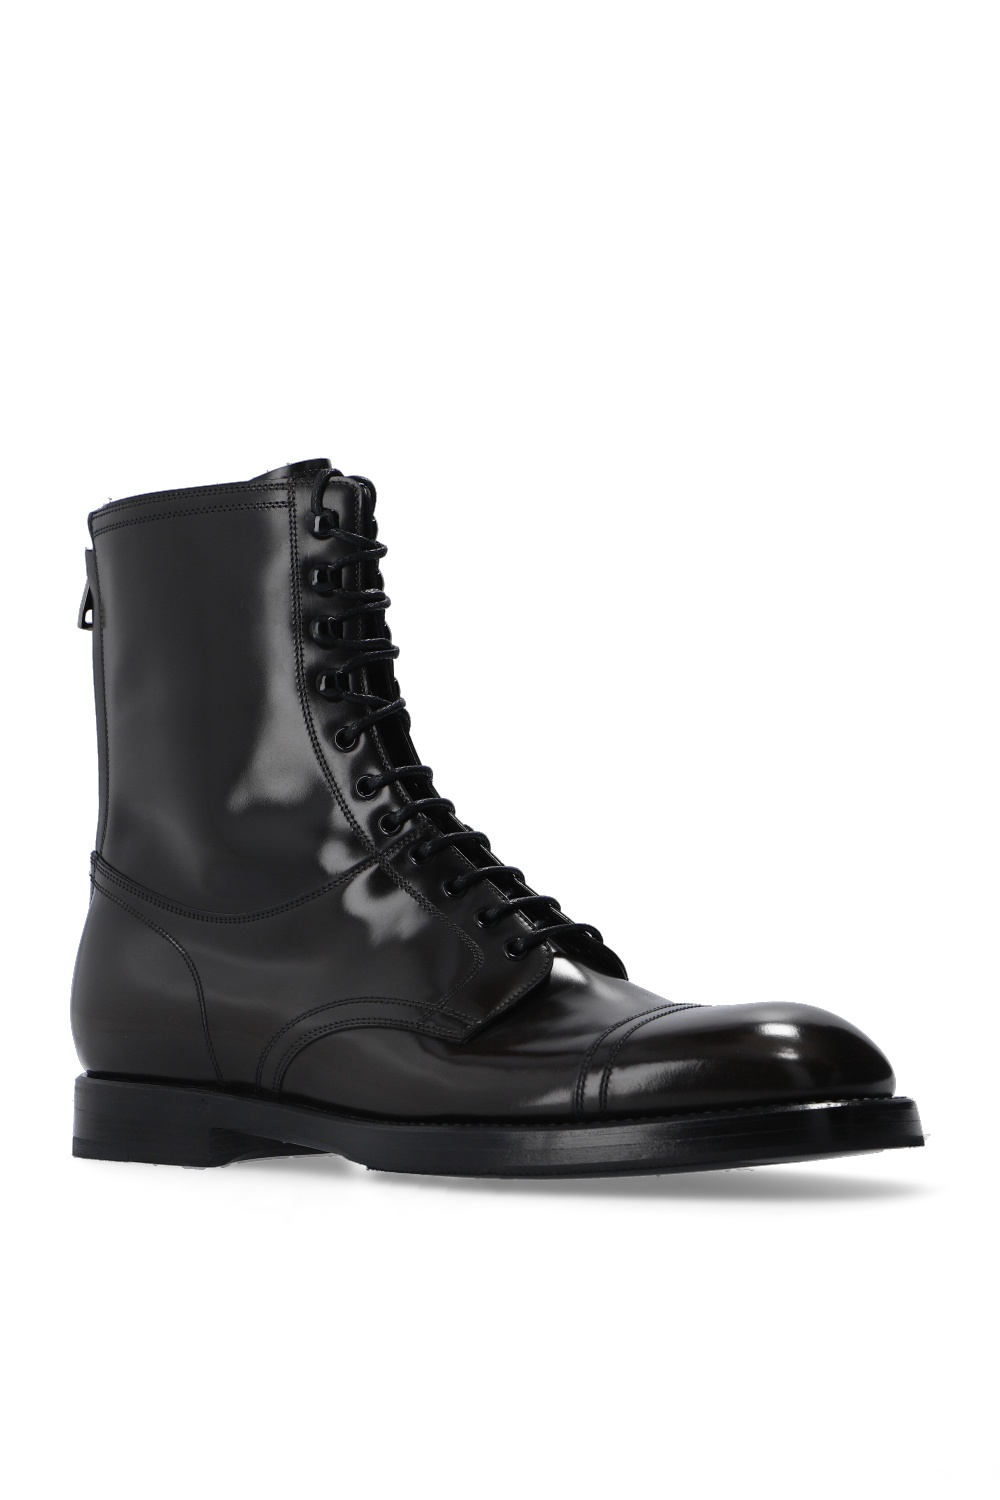 Dolce & Gabbana ‘Michelangelo’ ankle boots